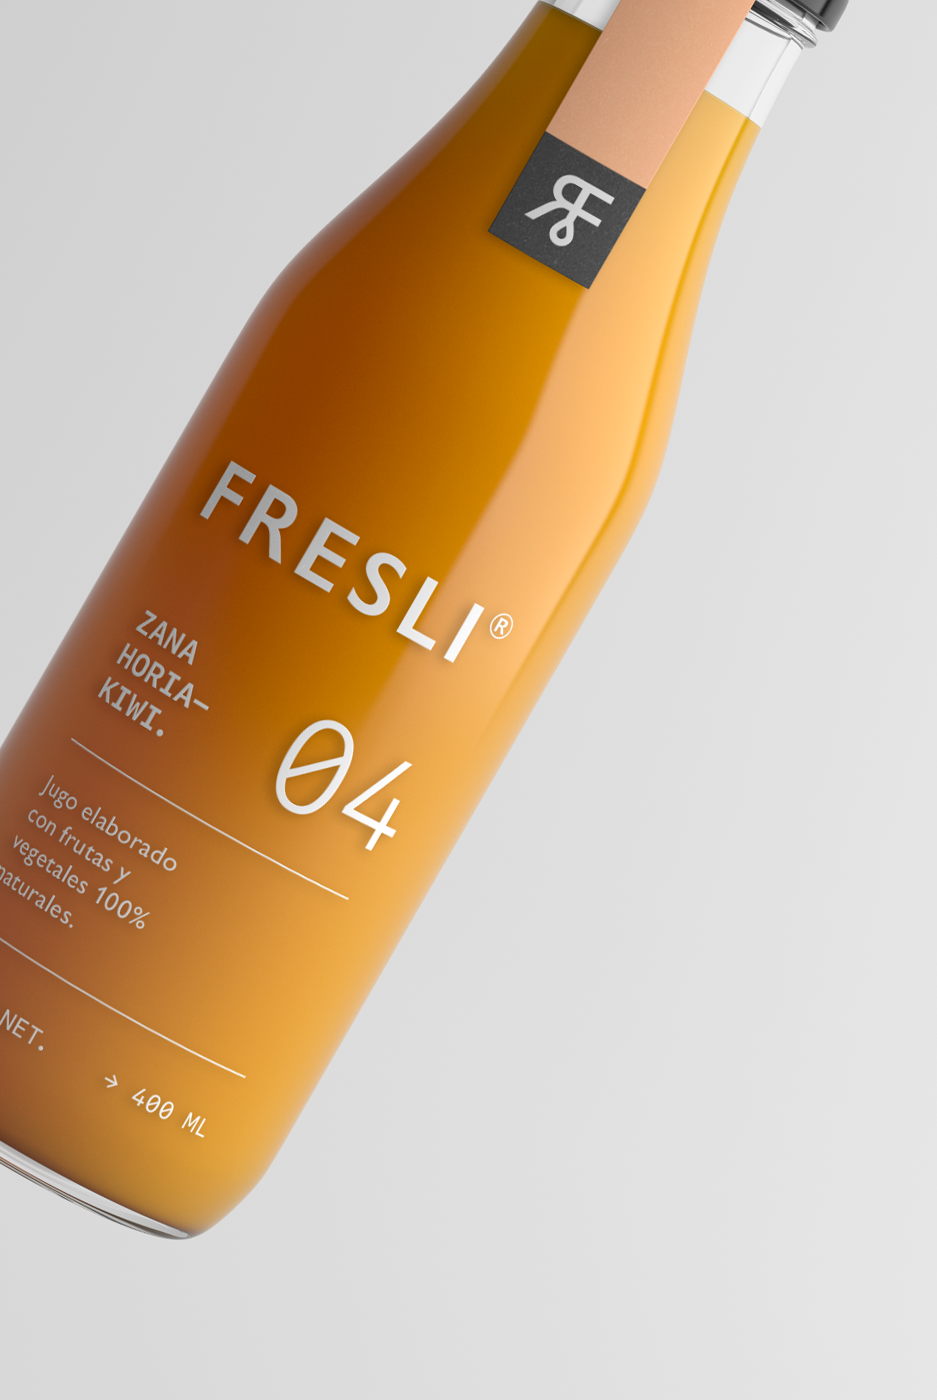 Fresli天然果汁包装设计